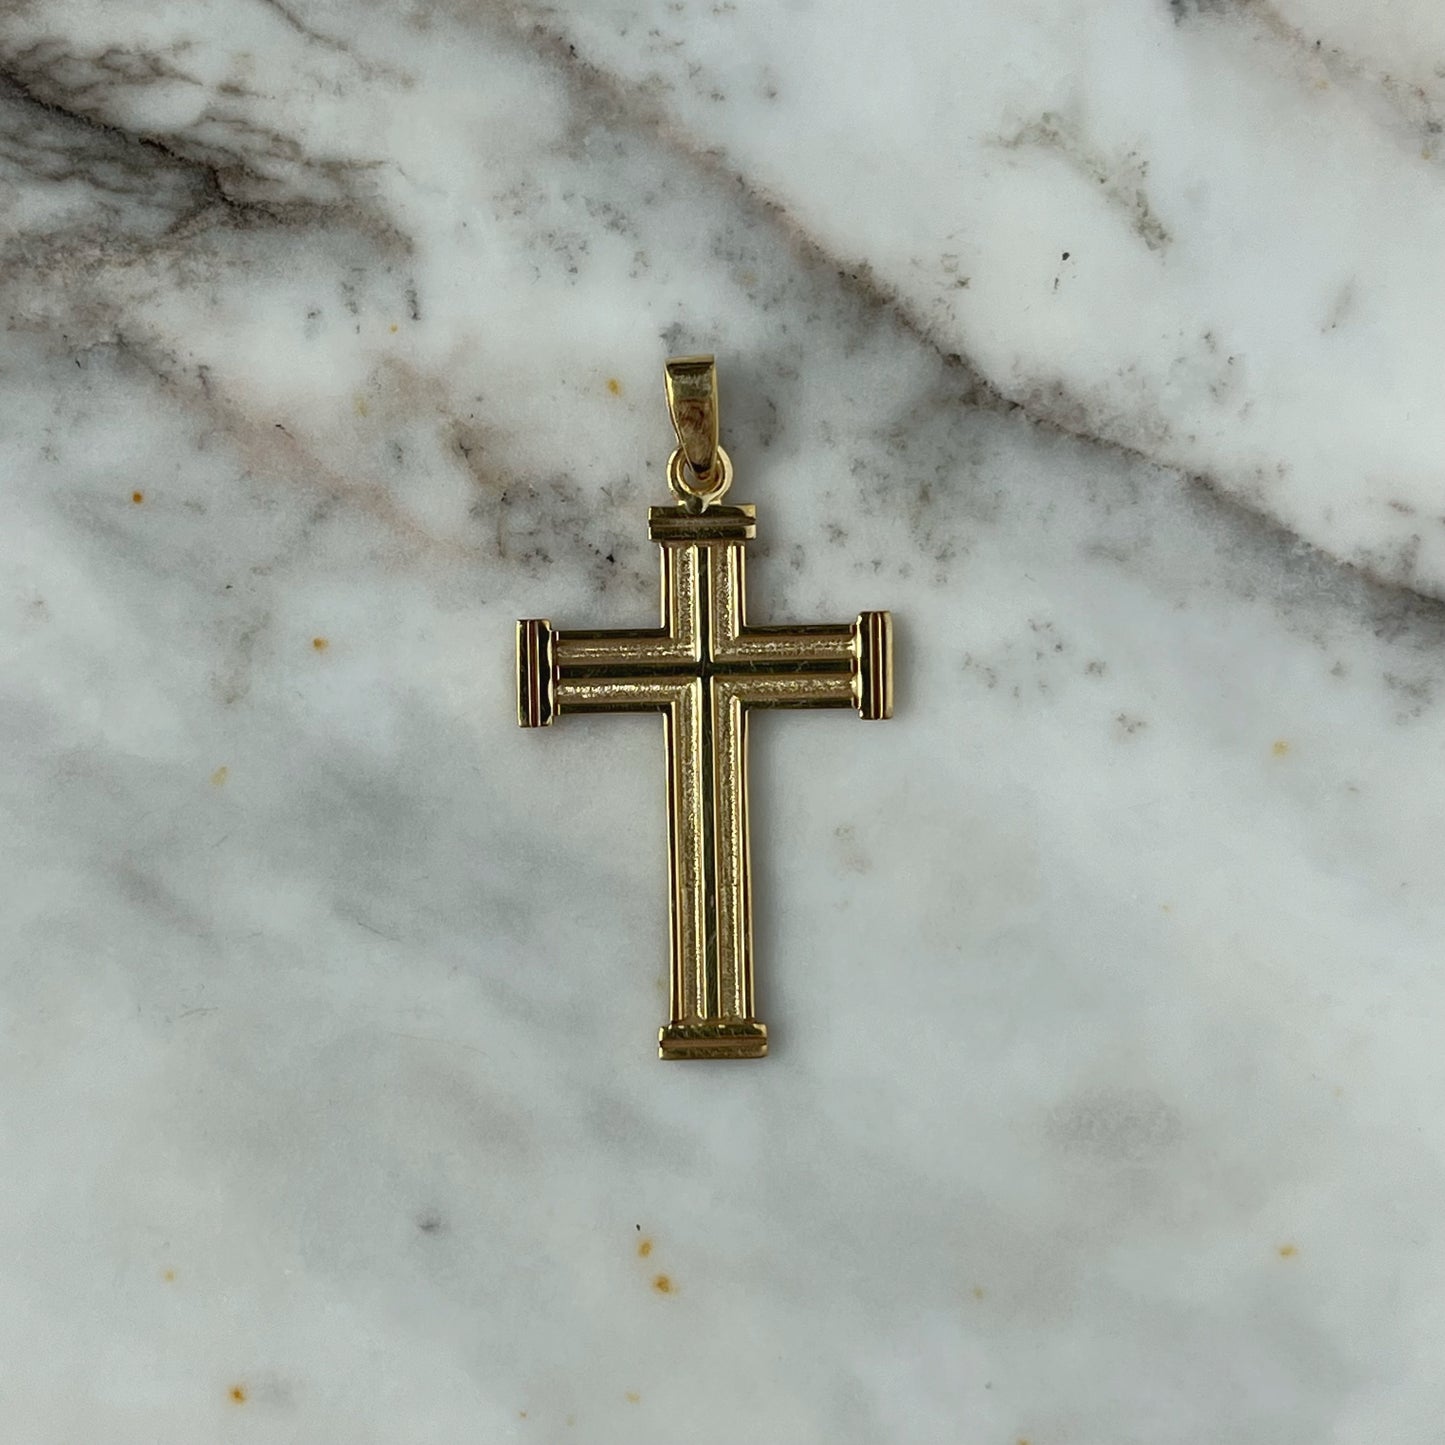 Dije de cruz romana en plata con baño de oro